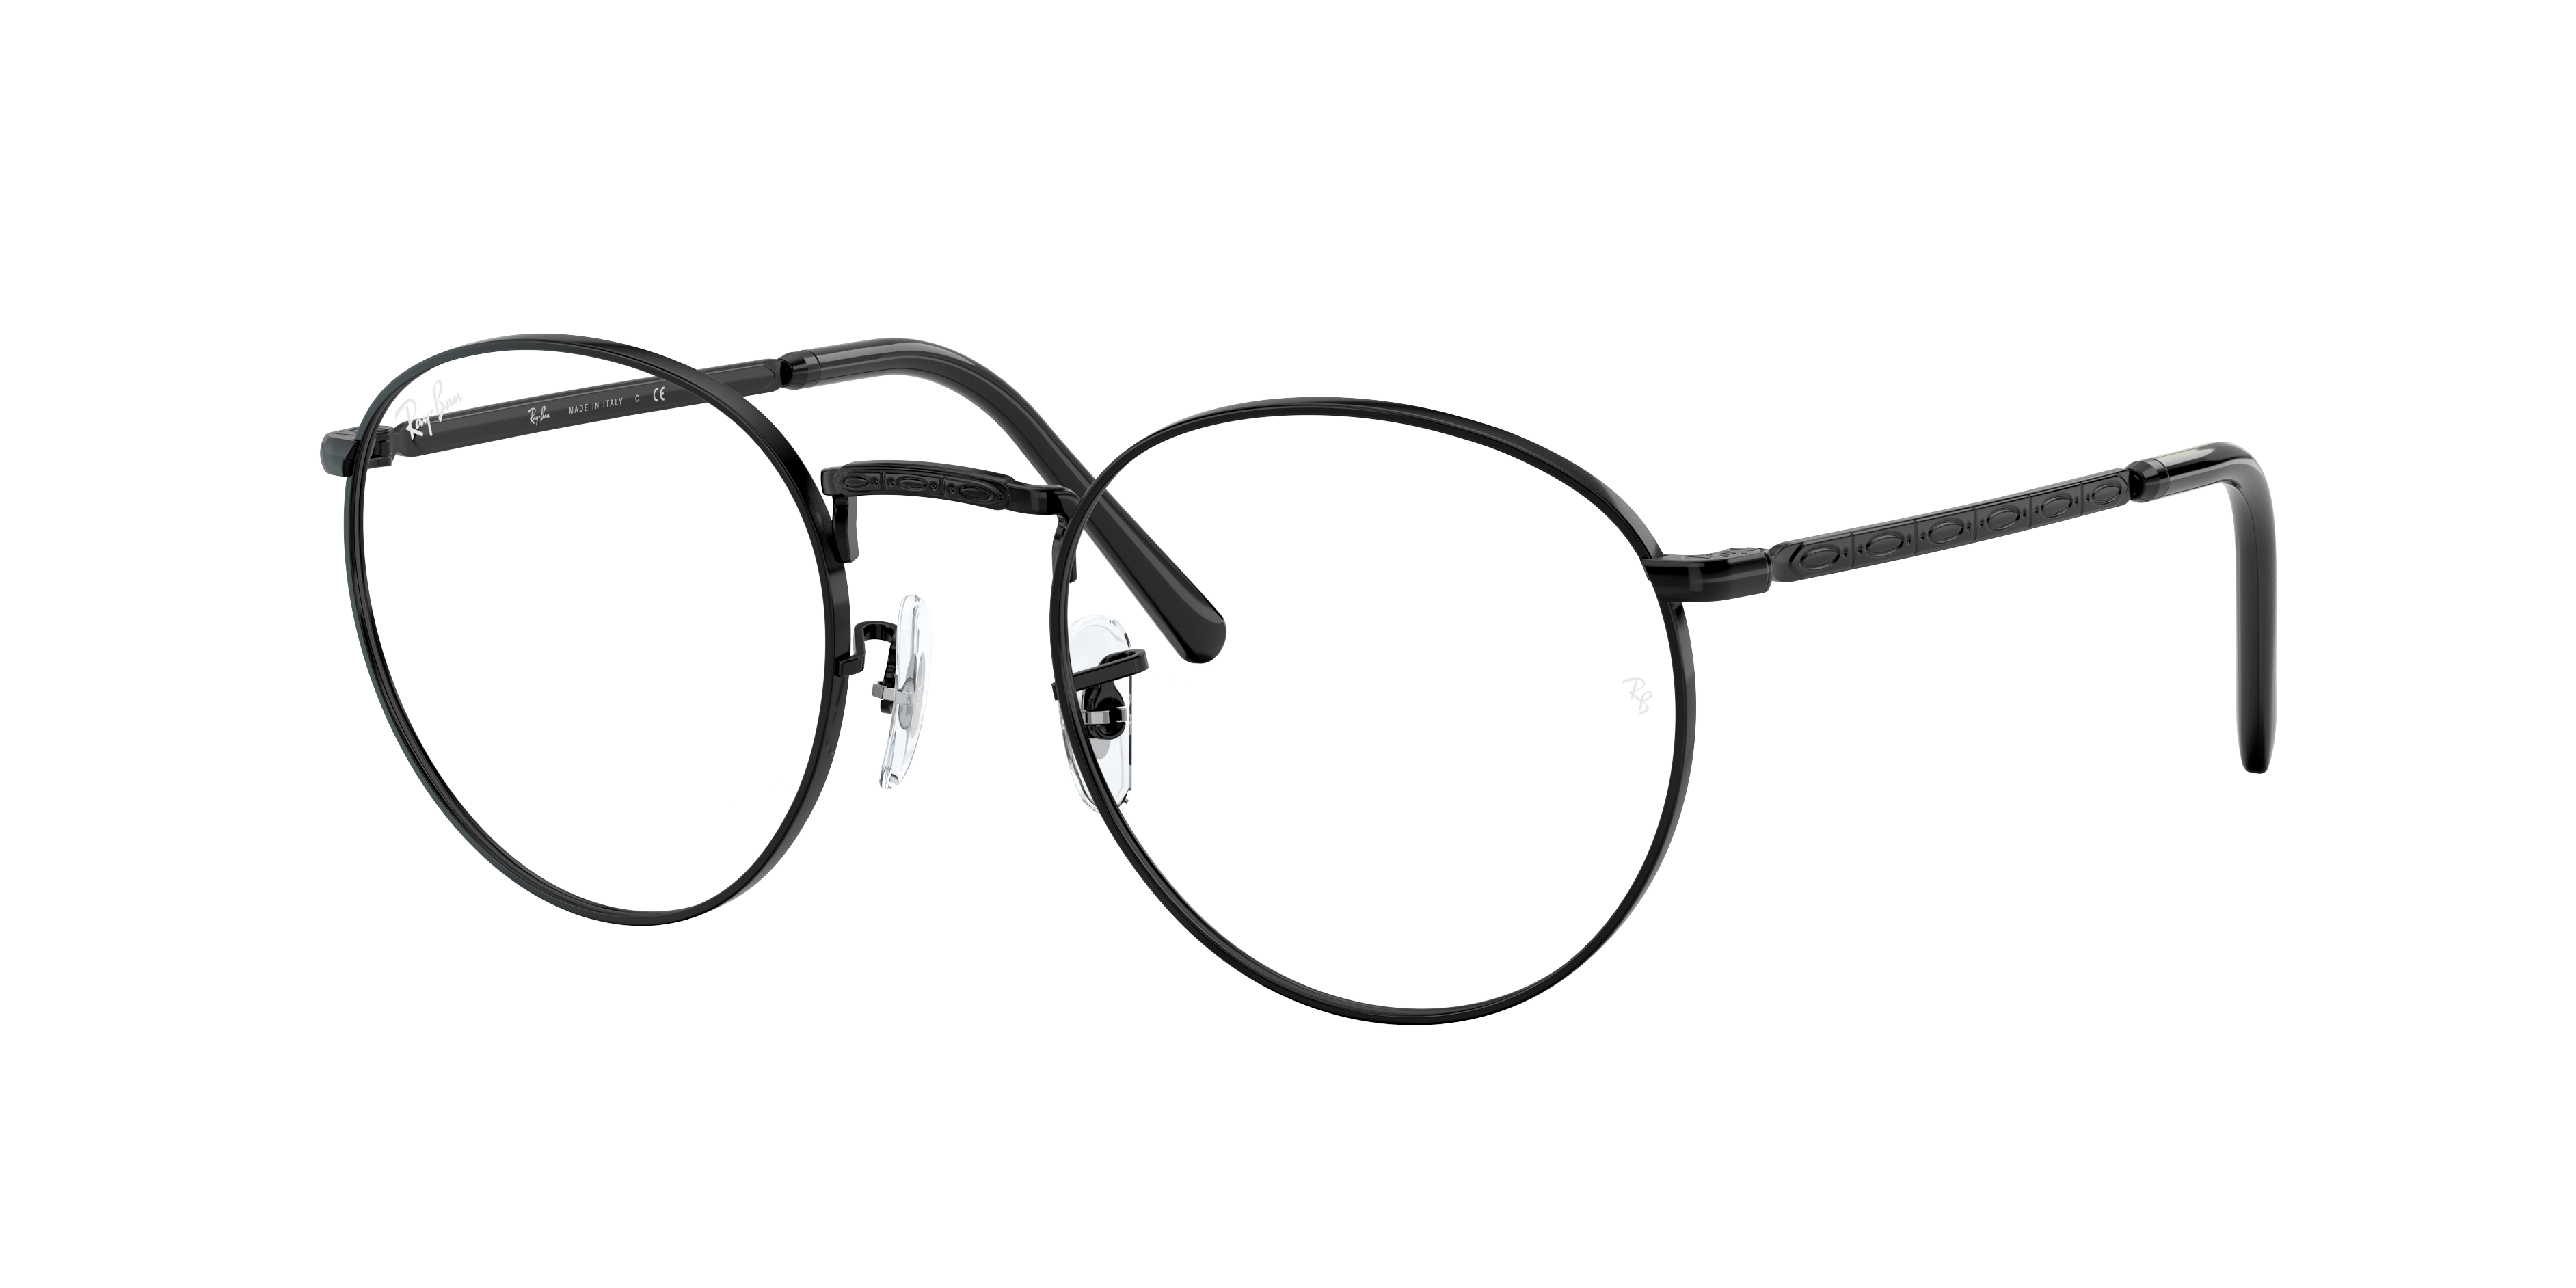 New Round Optics Eyeglasses with Black Frame | Ray-Ban®